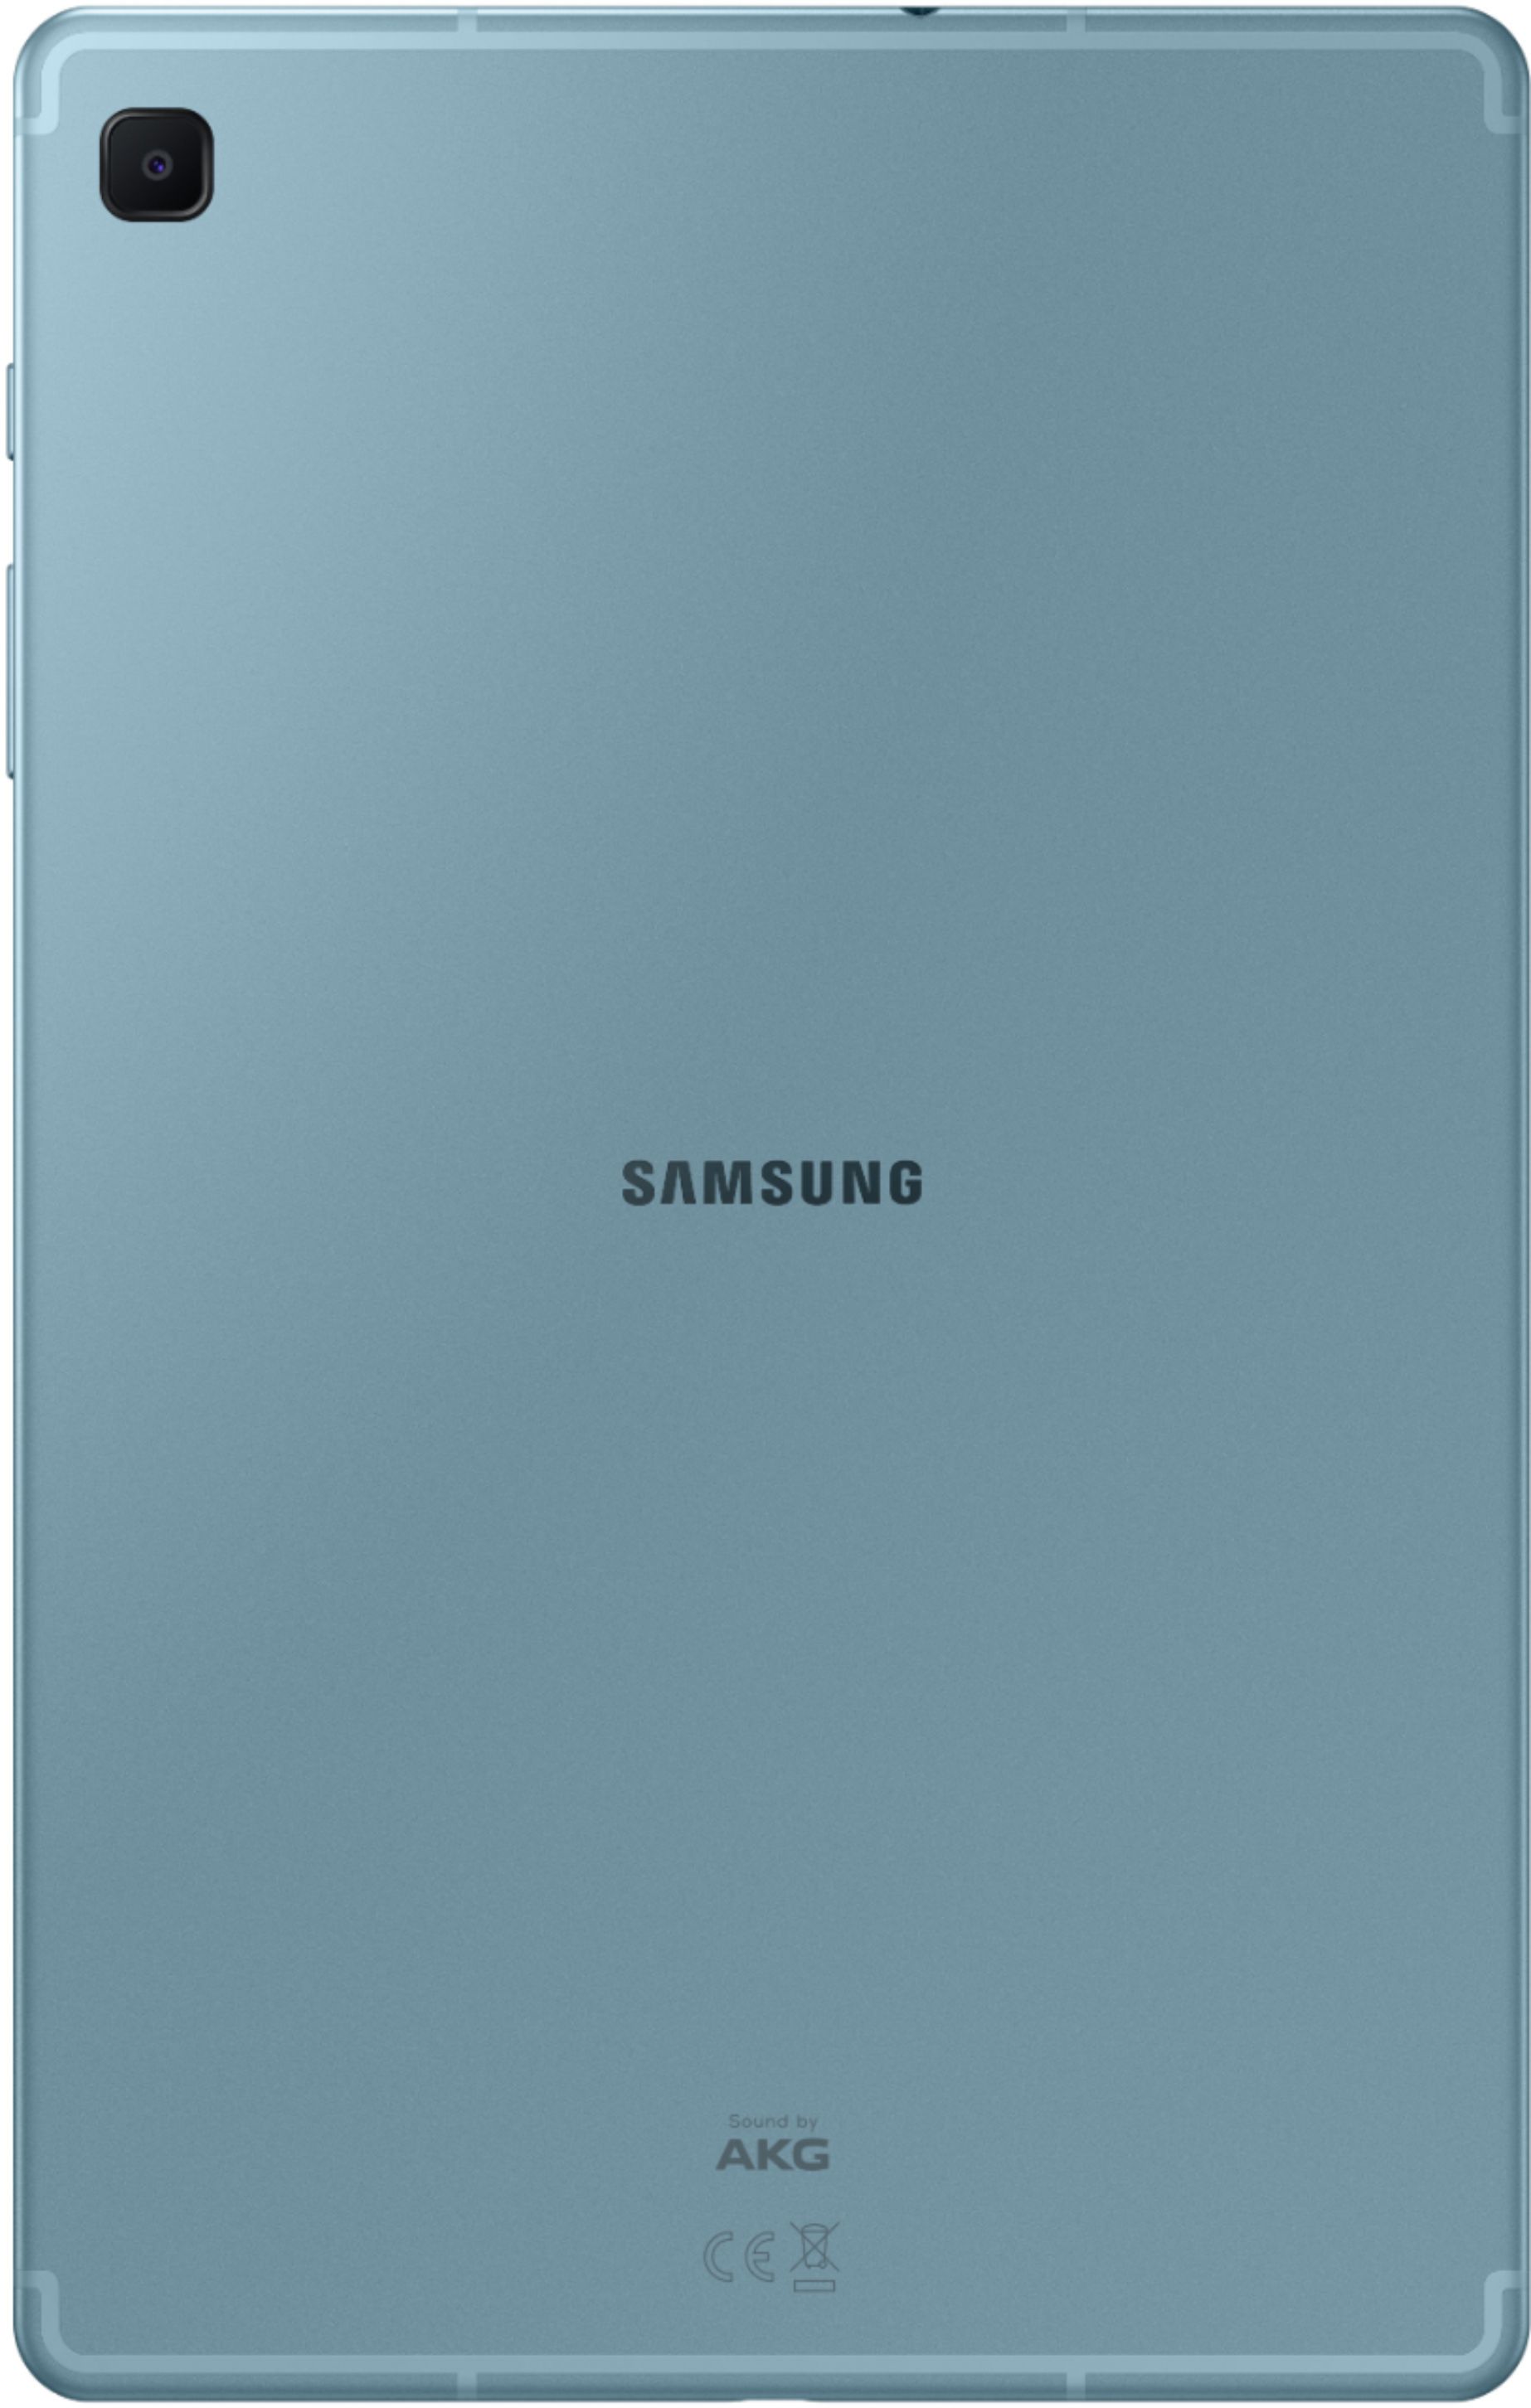 Samsung Galaxy Tab S6 Lite 10.4 64GB Oxford Gray SM-P610NZAAXAR - Best Buy